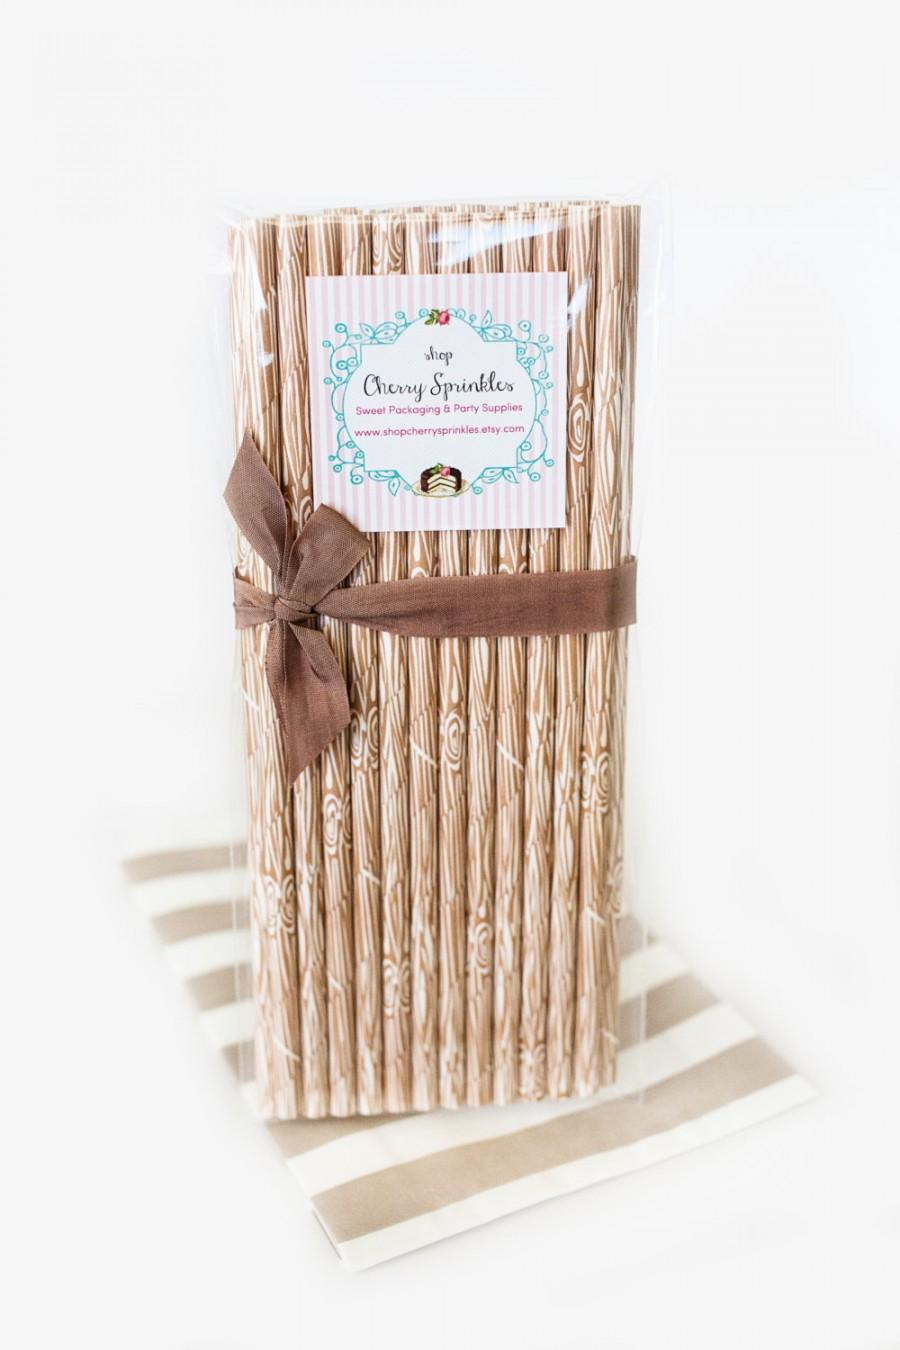 زفاف - Lumberjack party - Wood Grain paper straws - Woodland party - Rustic Wedding Decor - Cake Pops - Party Decor - Woodland Decor - Brown Straws